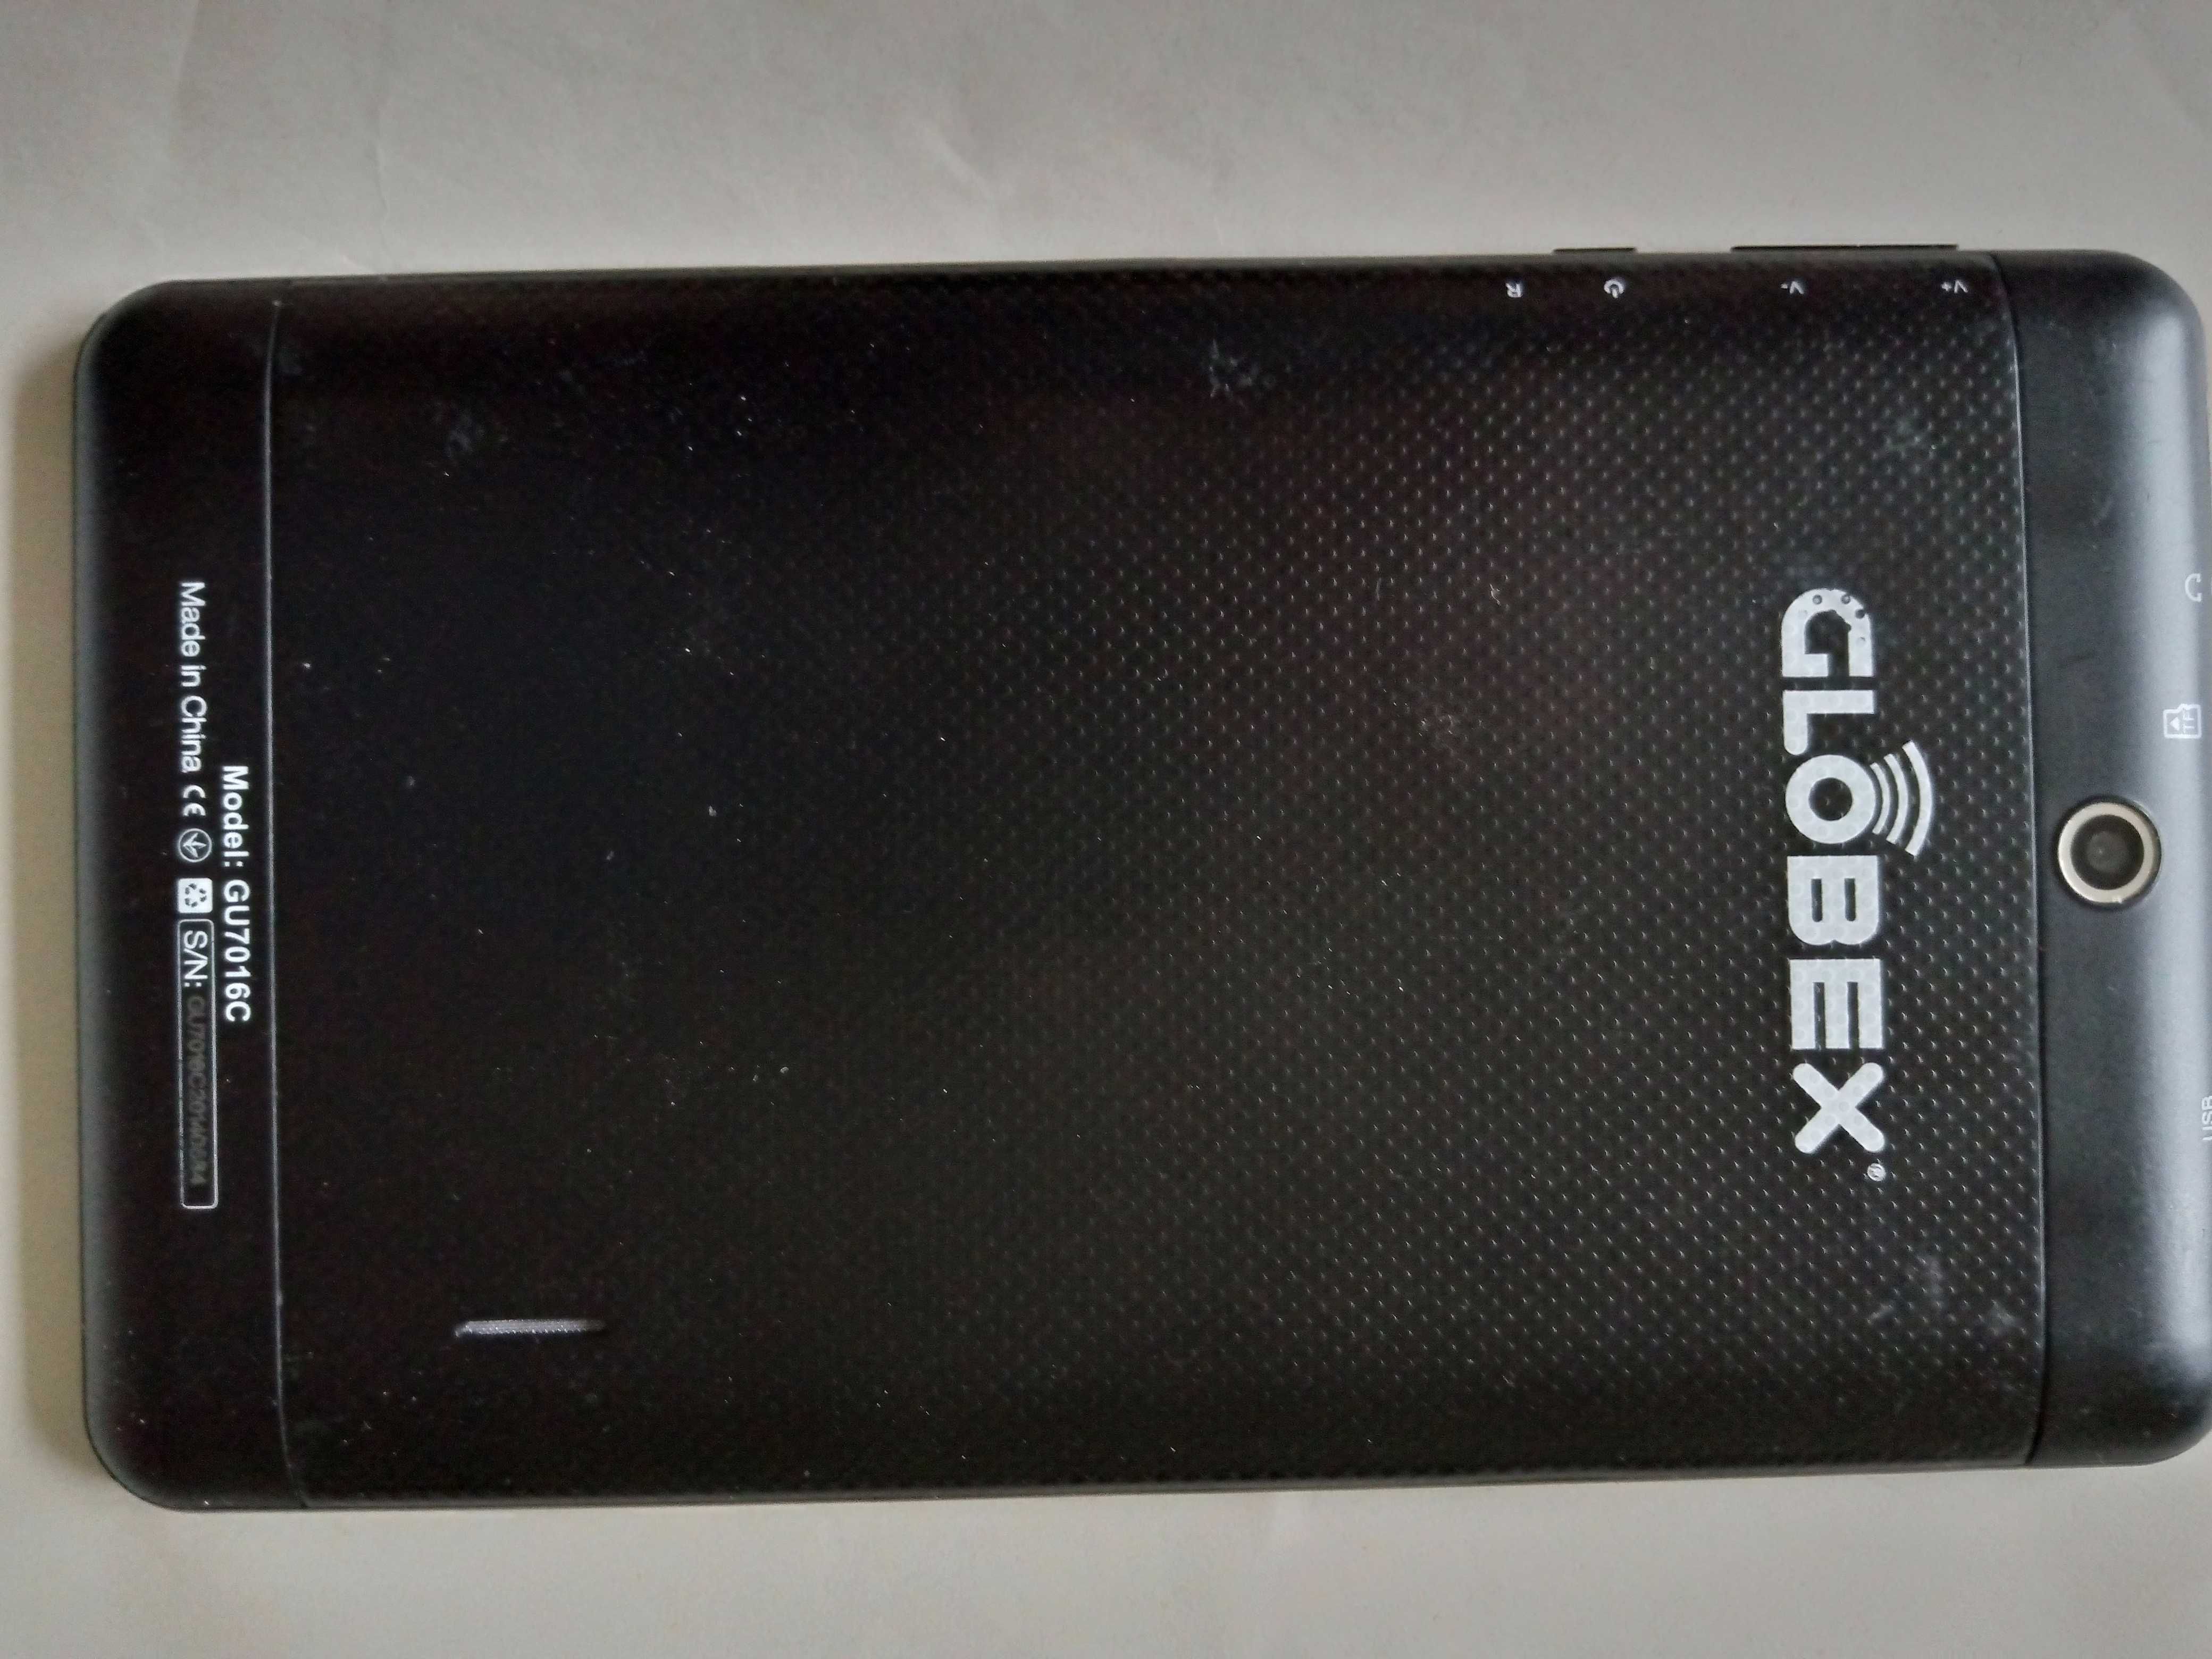 Globex GU7016C, автопланшет-новигатор ANDROID, 3G, 2 SIM